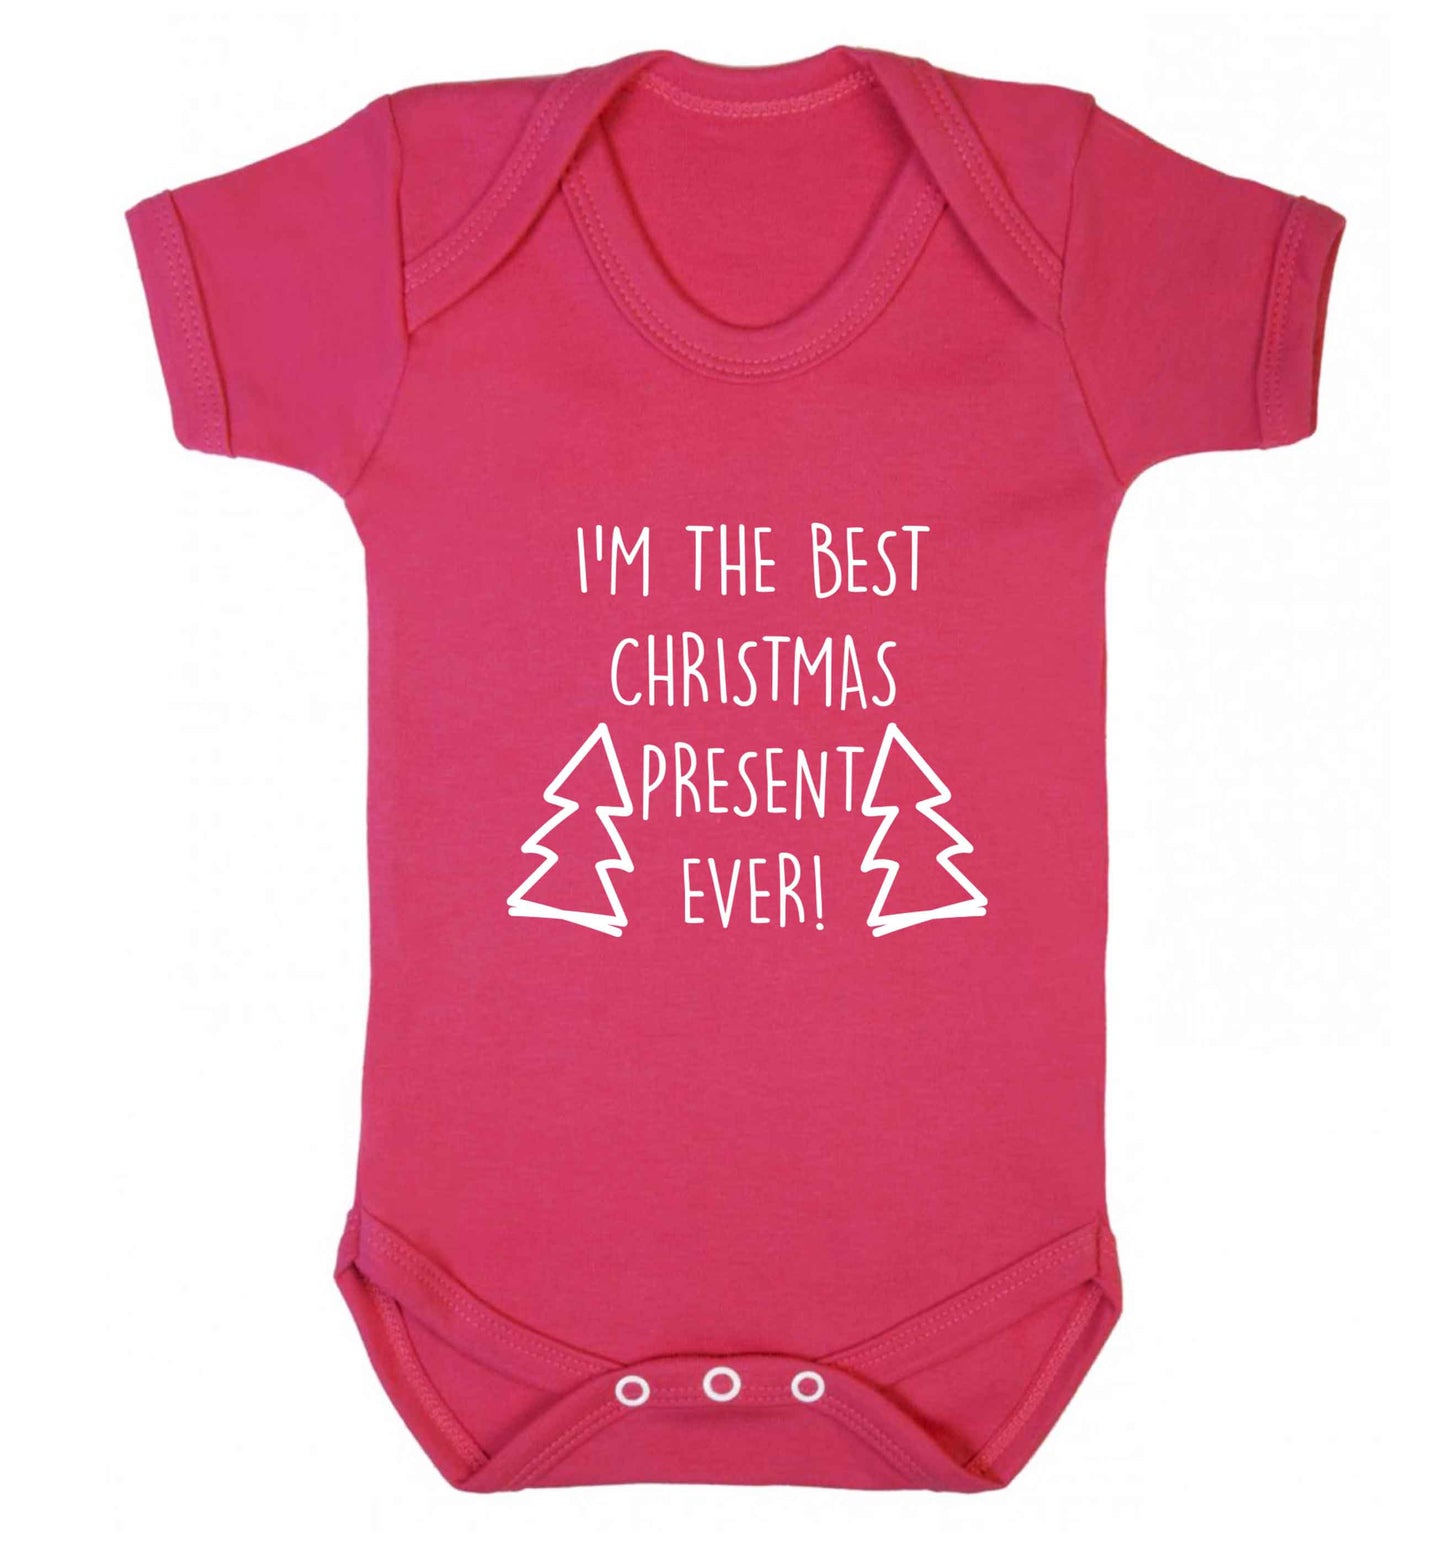 I'm the best Christmas present ever baby vest dark pink 18-24 months